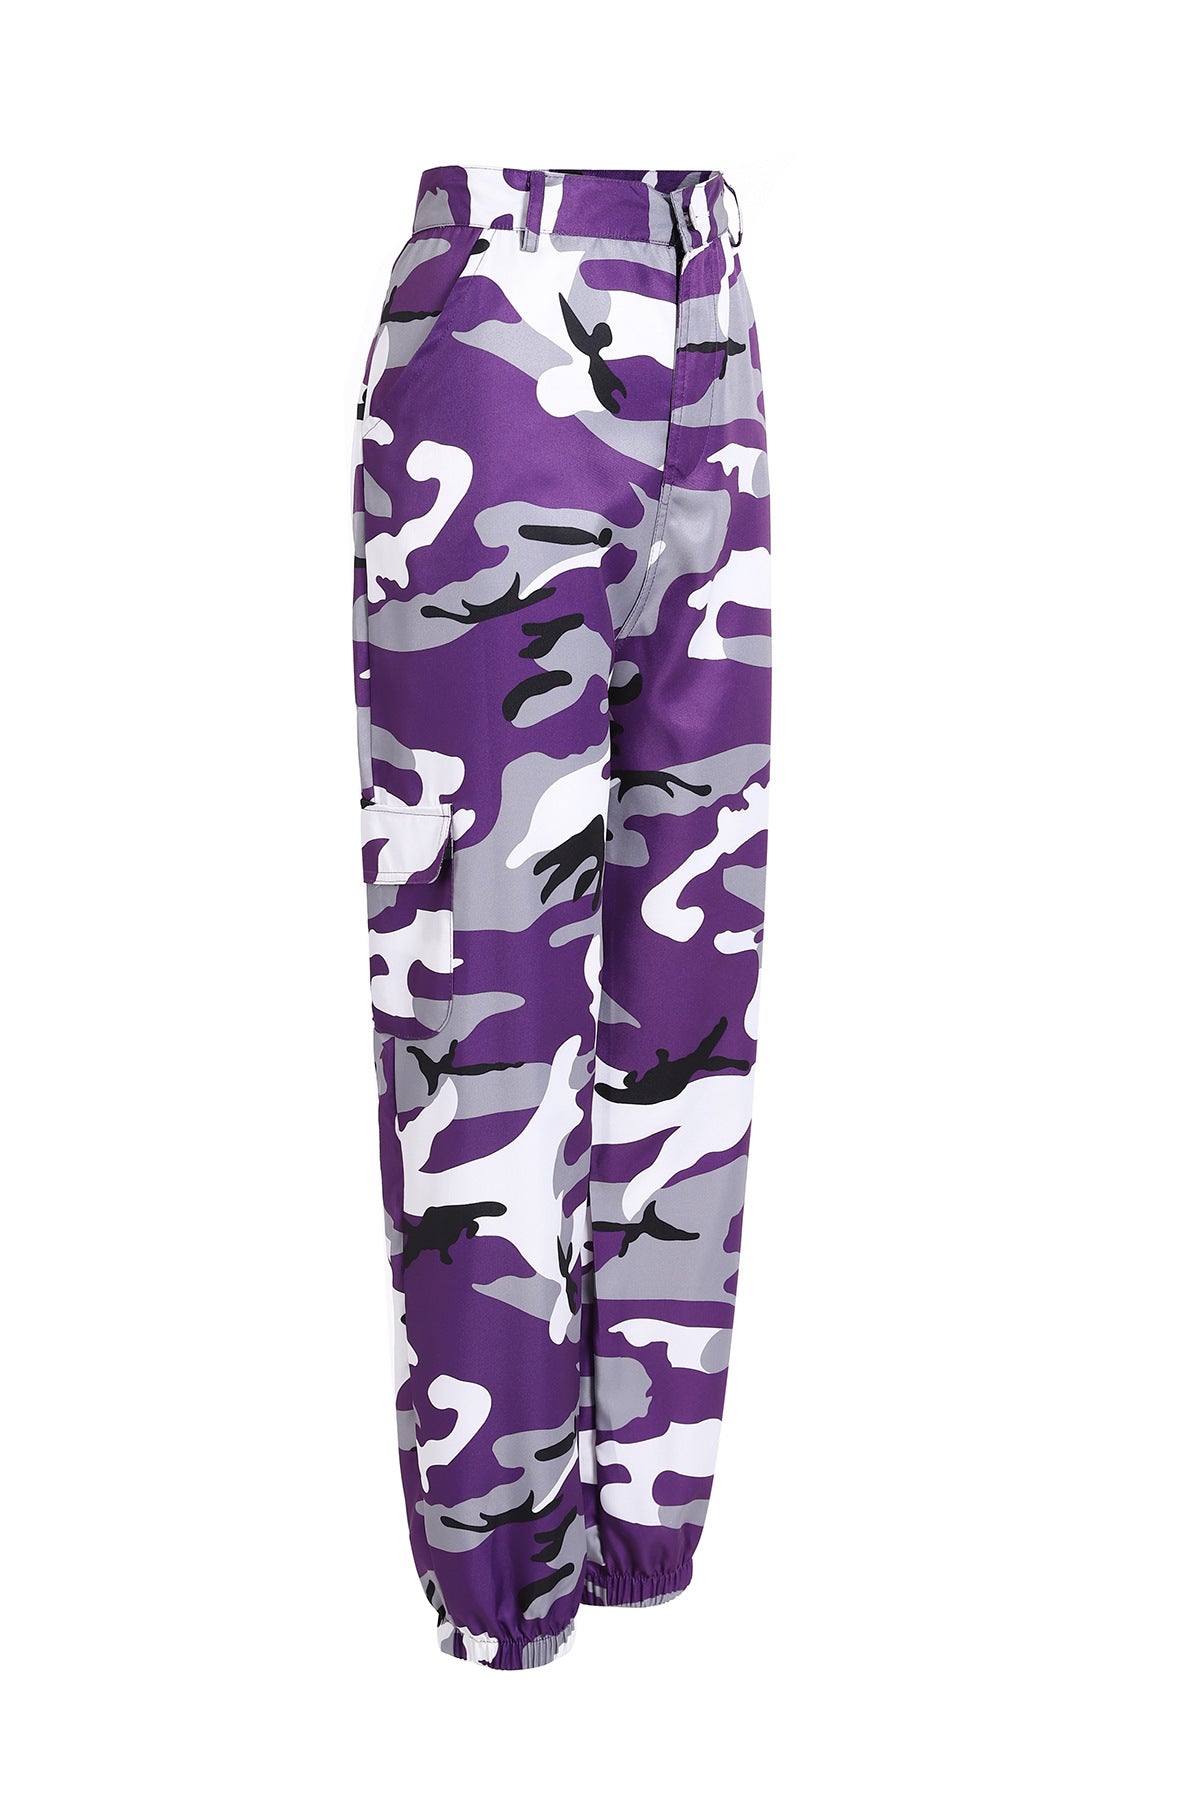 New Camouflage Workwear Denim Casual Pants Harem Pants